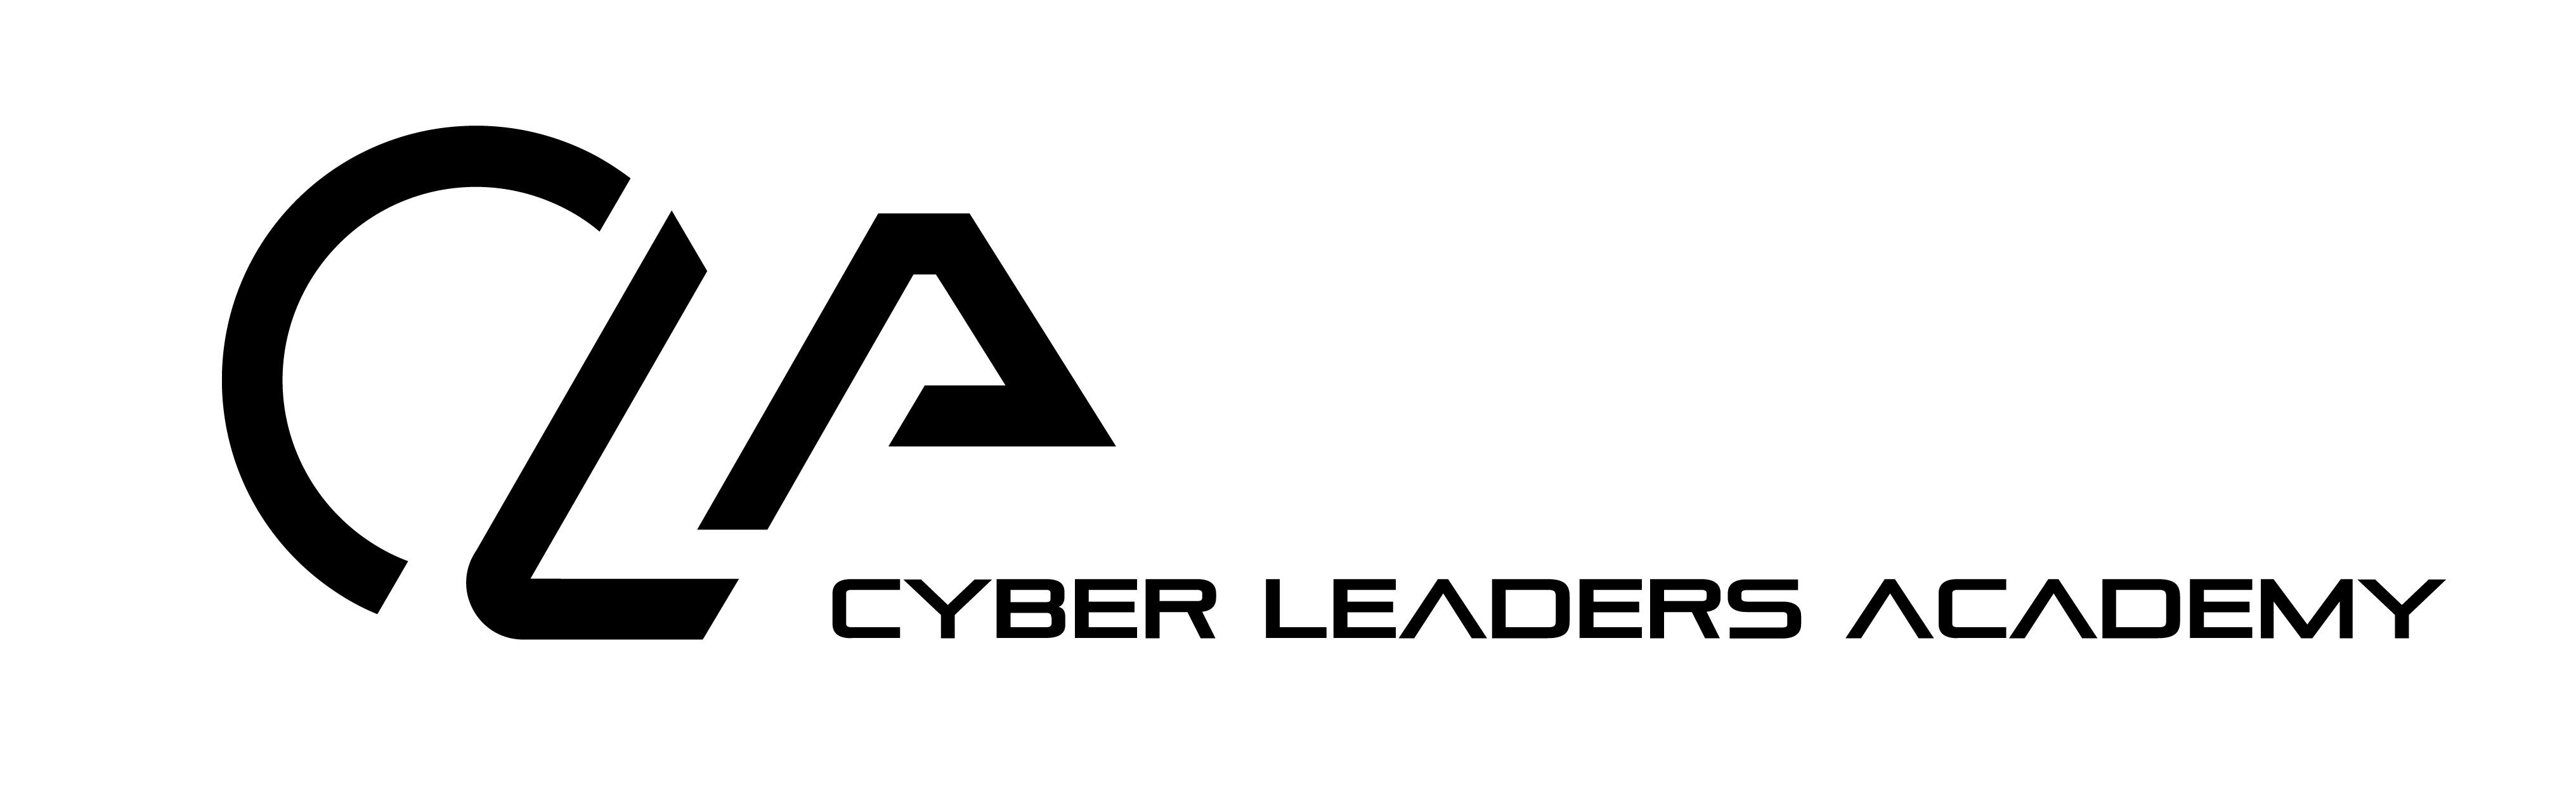 Cyber Leaders Academy Logo